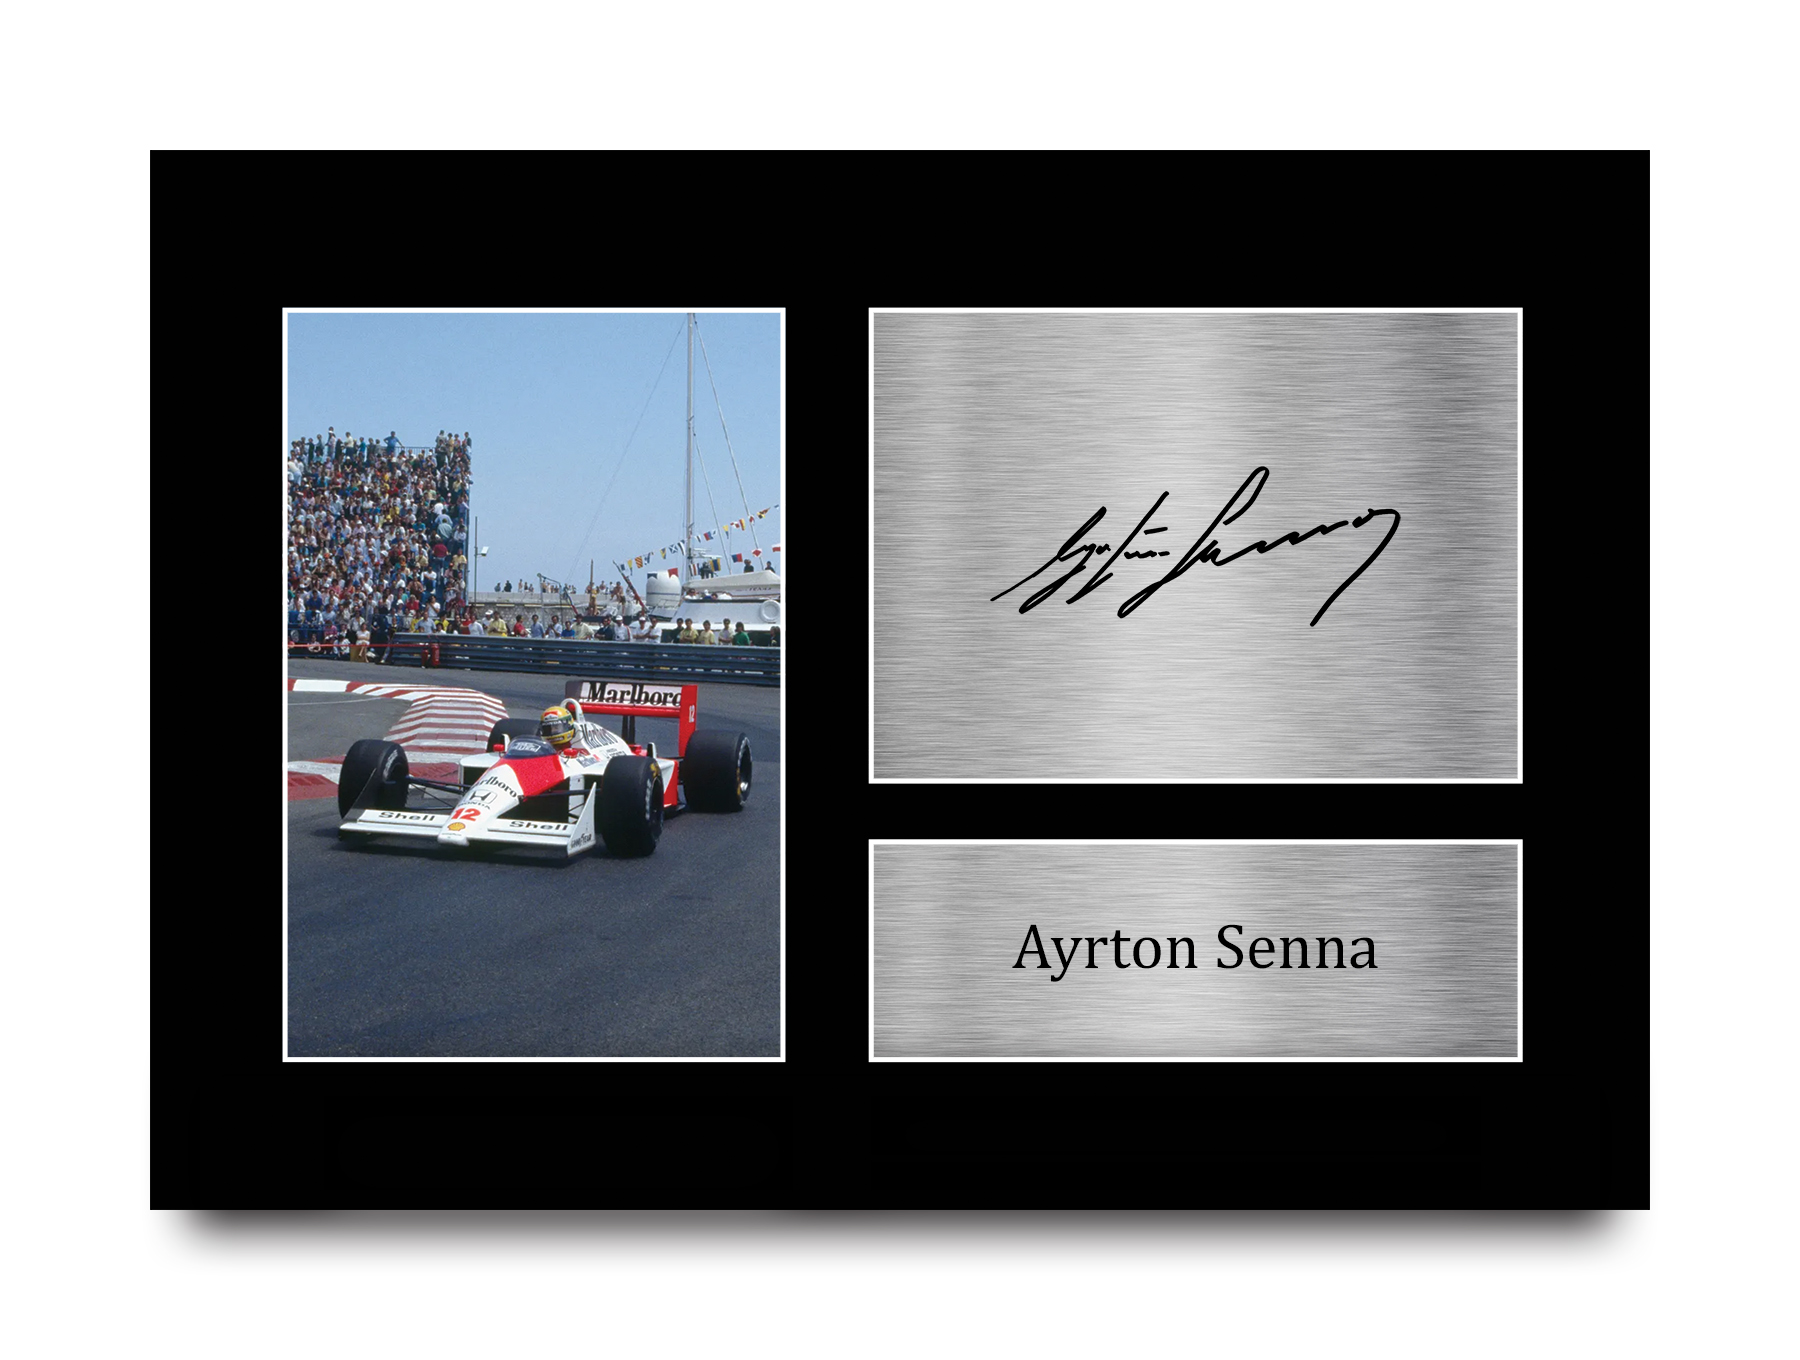 ayrton senna f1 legend signed a4 photograph reprint great gift ######## ##54 